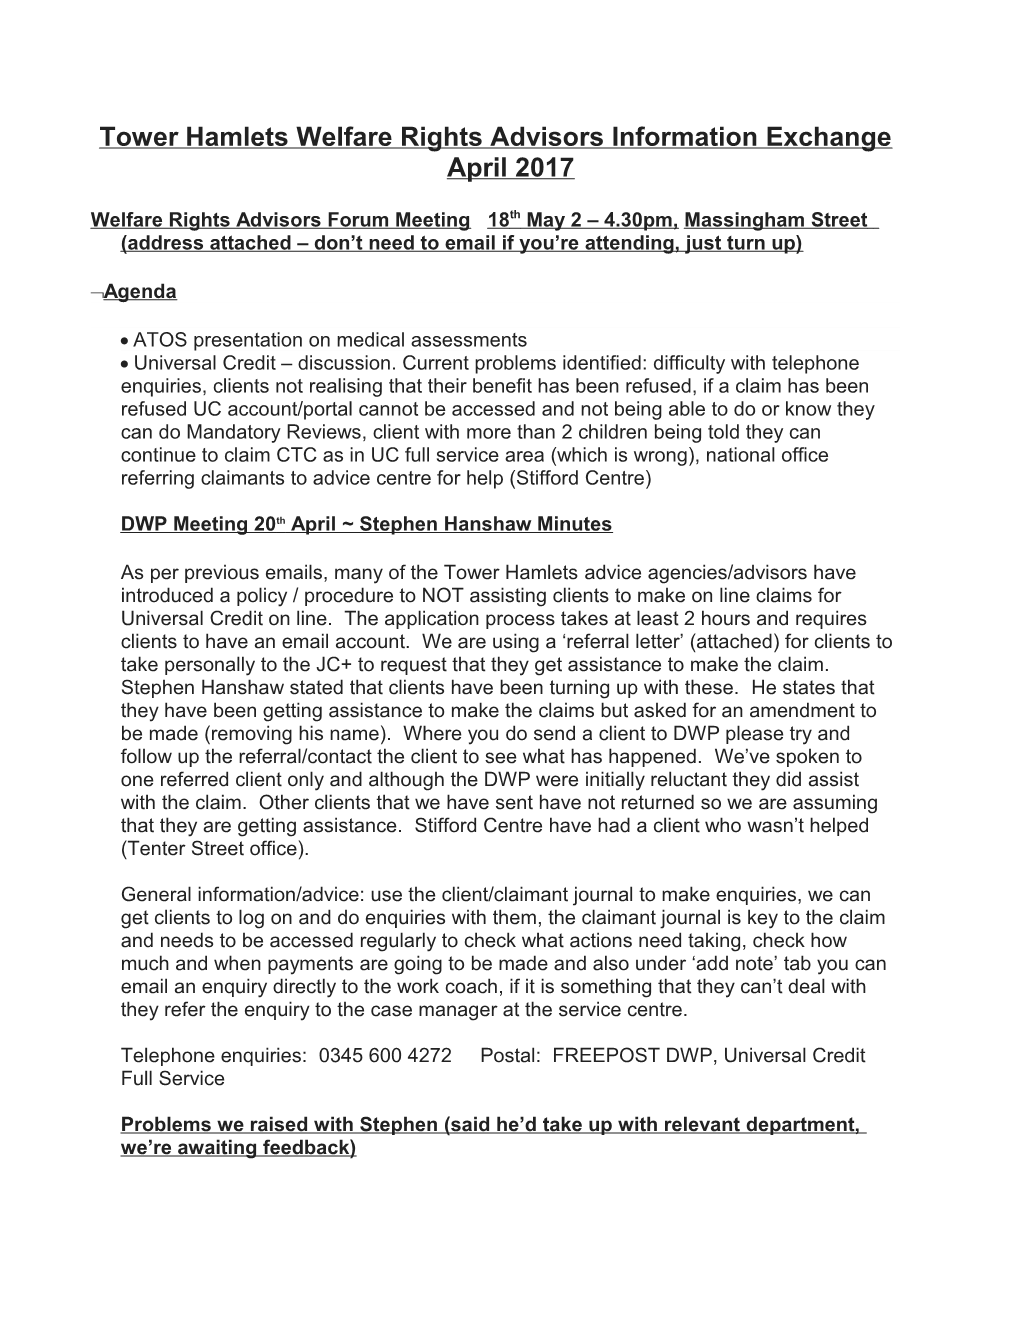 Tower Hamlets Welfare Rights Advisors Information Exchange April 2017